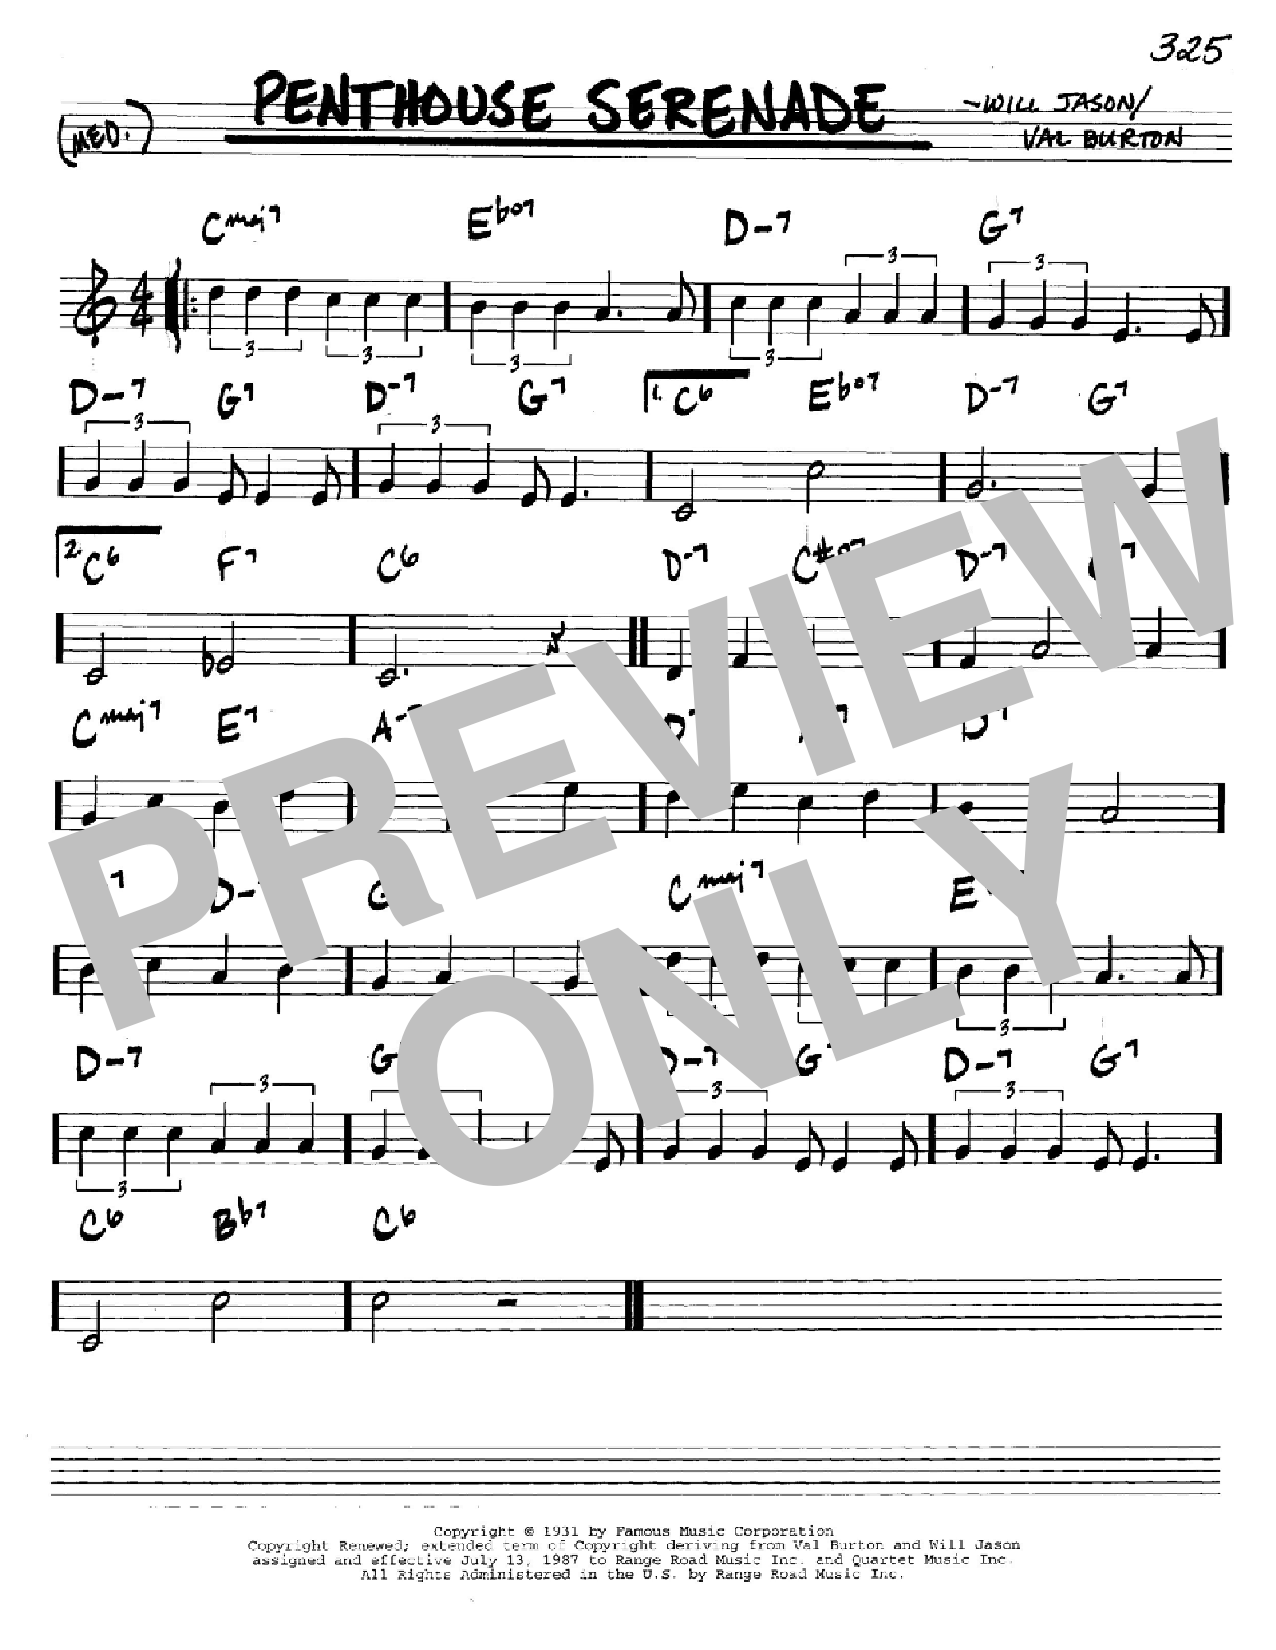 Download Nat King Cole Penthouse Serenade Sheet Music